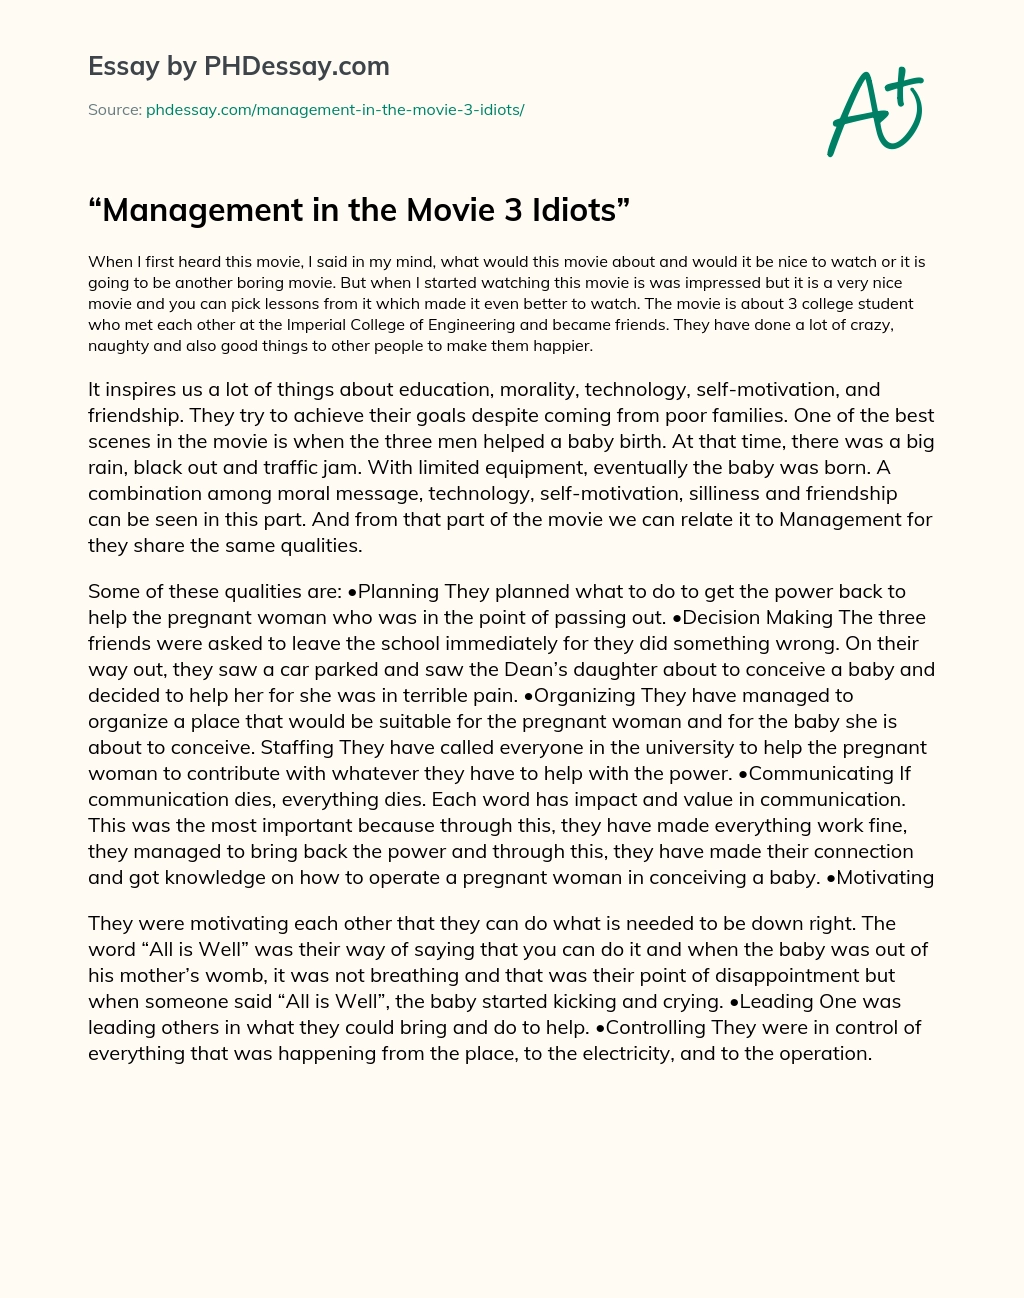 Management in the Movie 3 Idiots essay